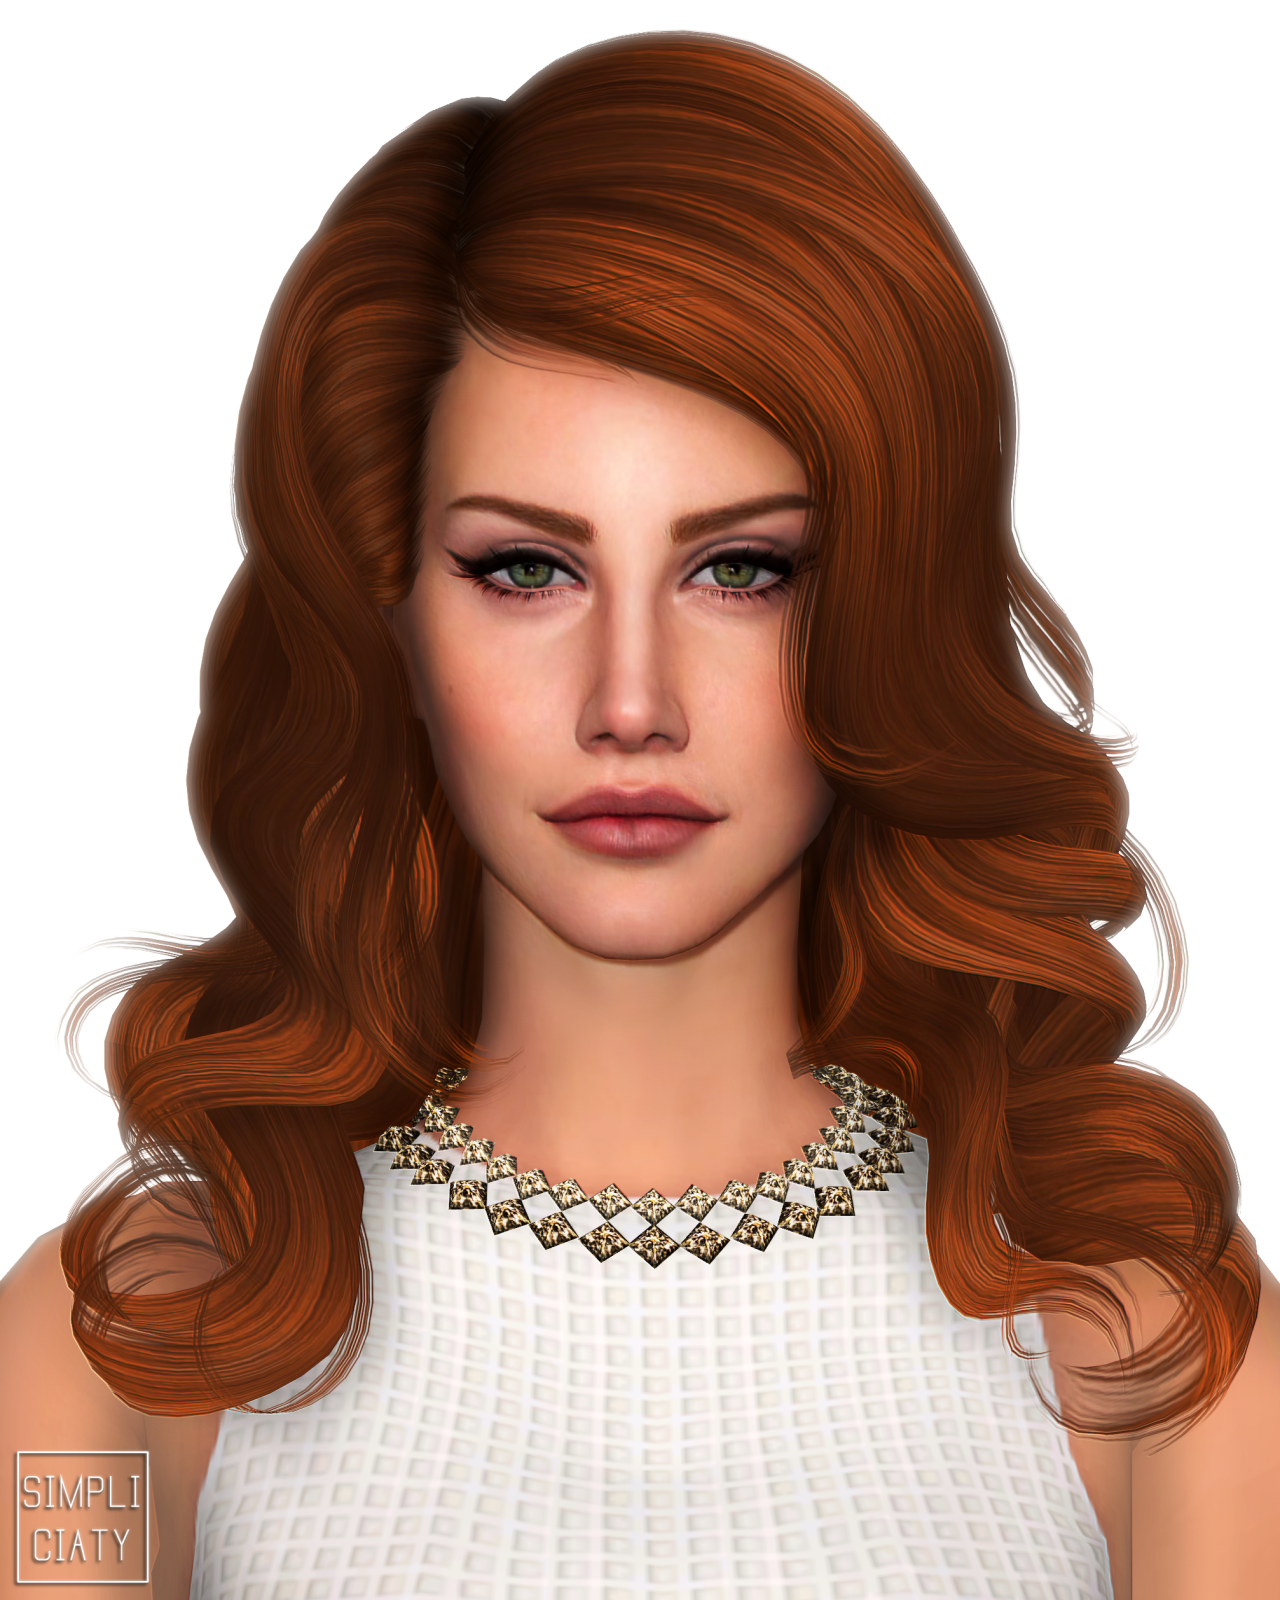 Sims 4 Lana Del Rey Cc Meme Painted.